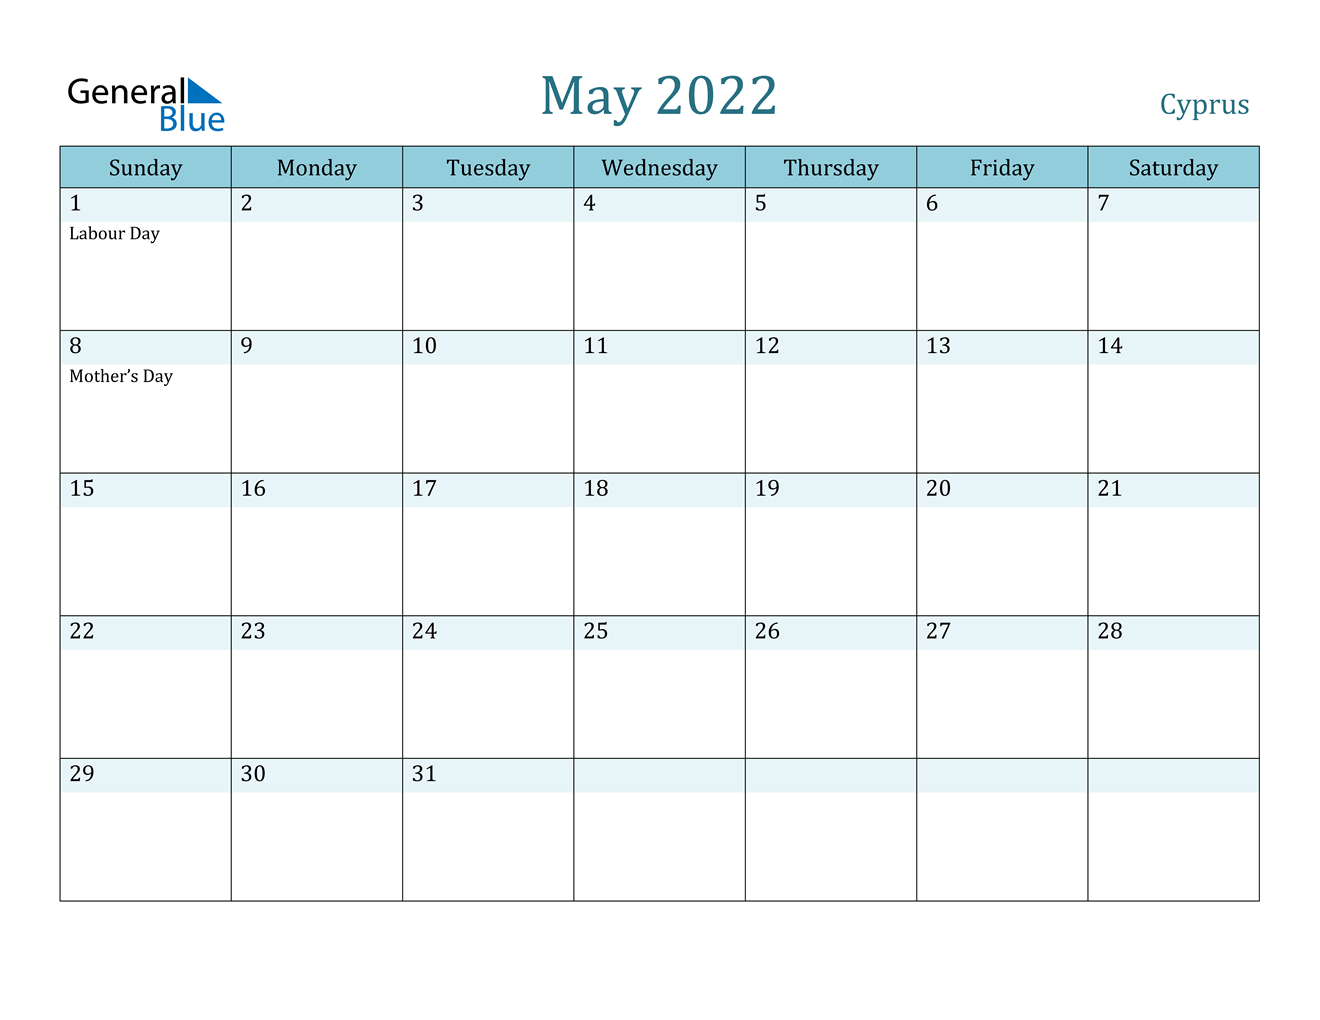 May 2022 Calendar - Cyprus  May 2022 Calendar Printable